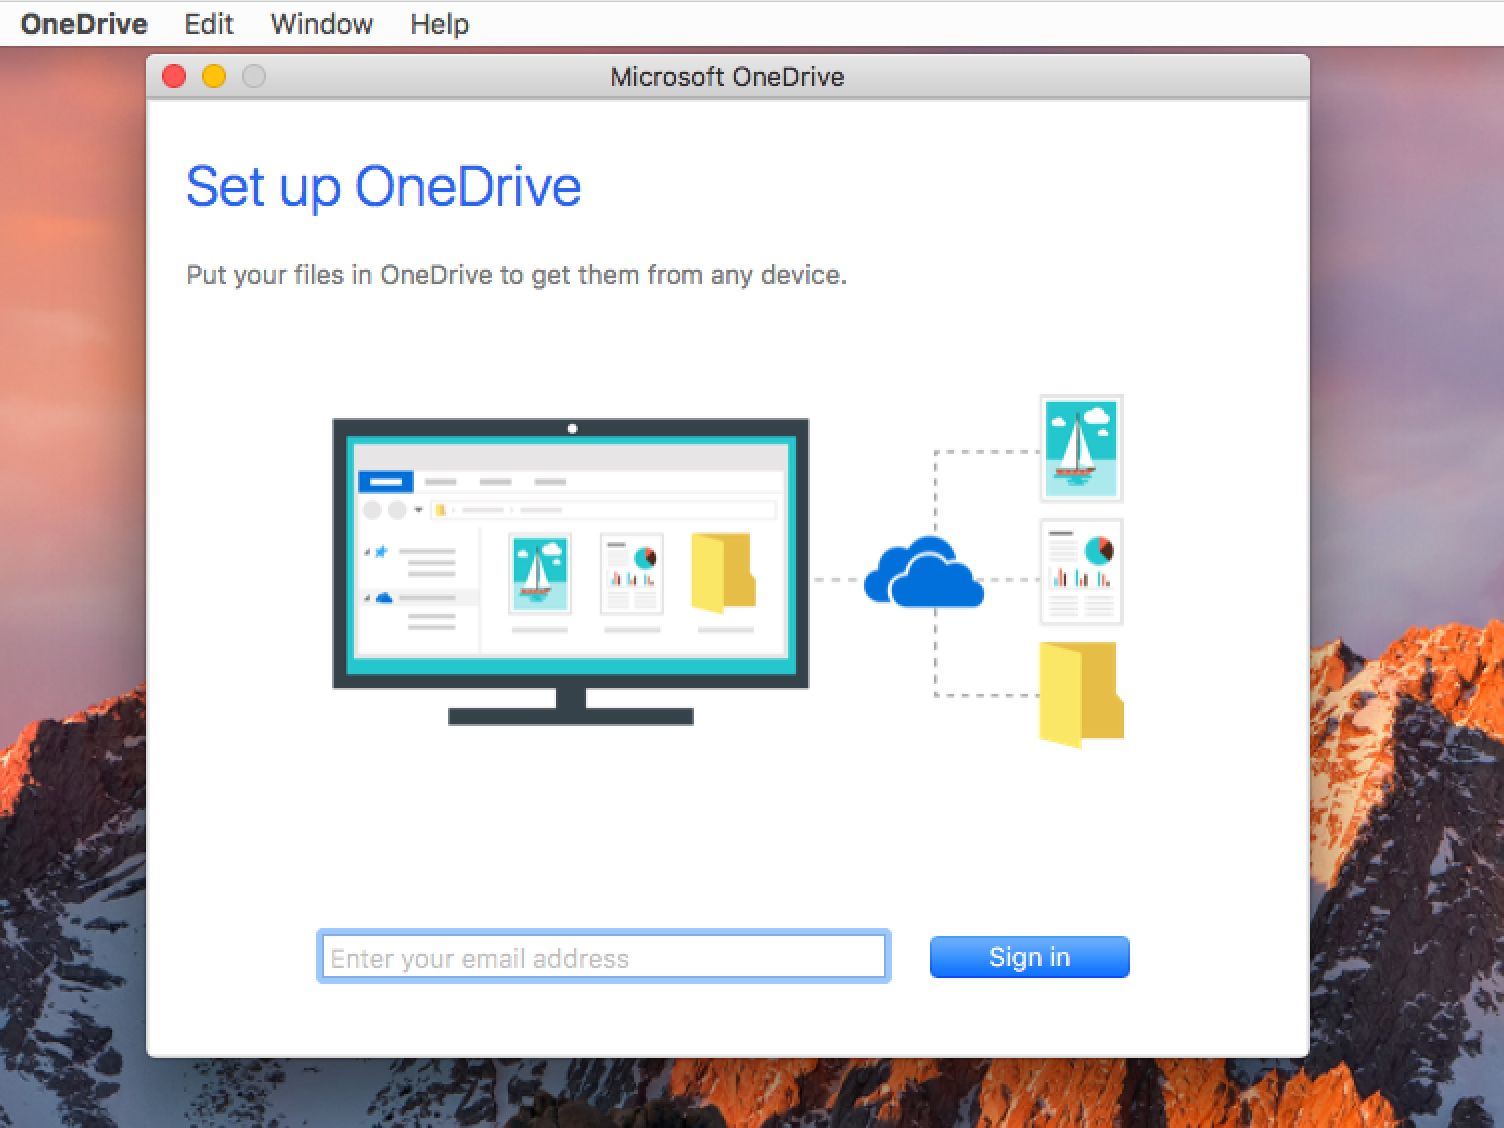 One drive for business desktop application